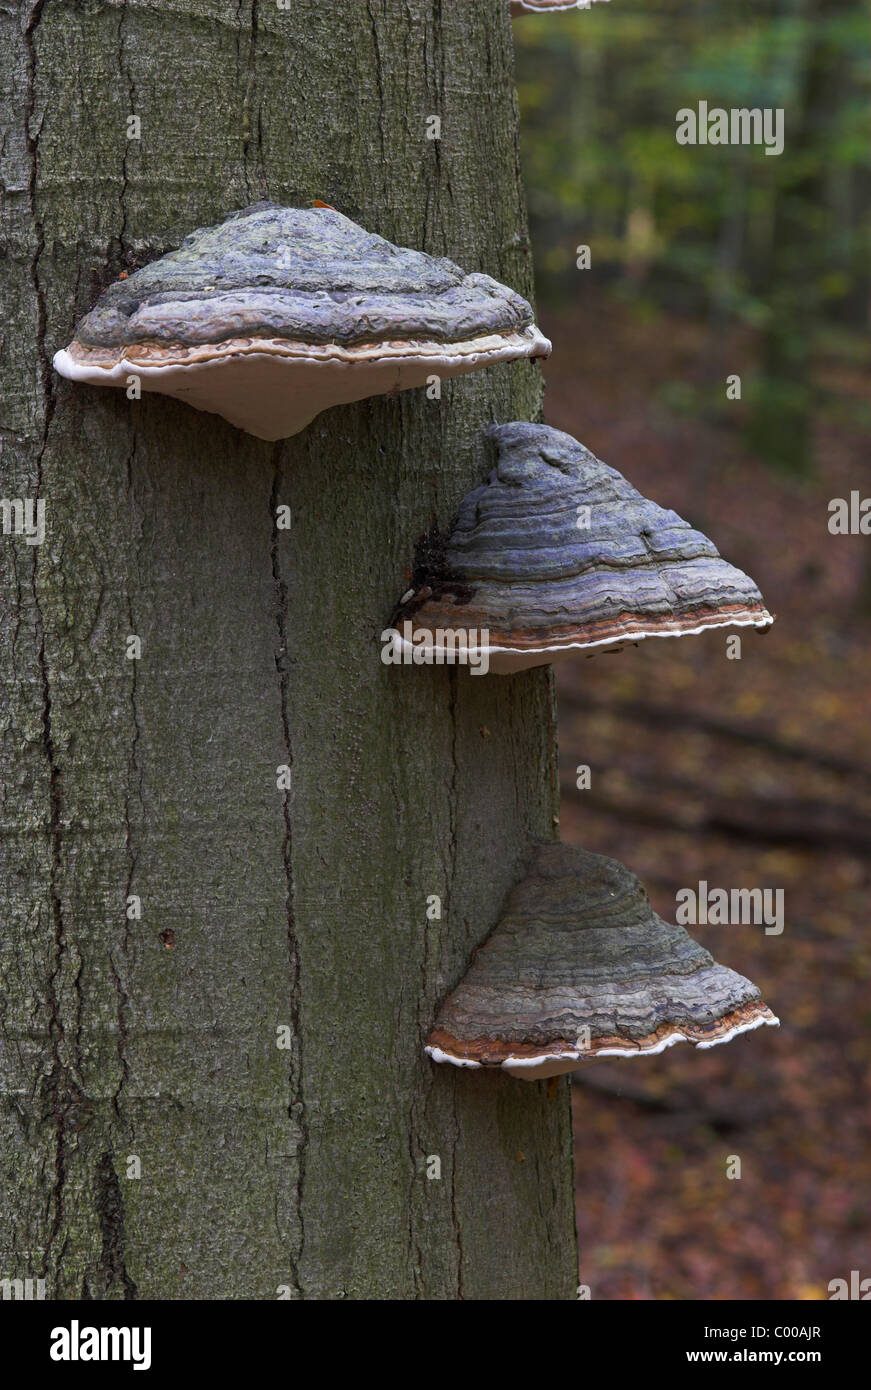 Zunderschwamm, Fomes fomentarius, Horse's hoof fungus, Fruchtkoerper, toter Baumstamm, deadwood trunk Stock Photo